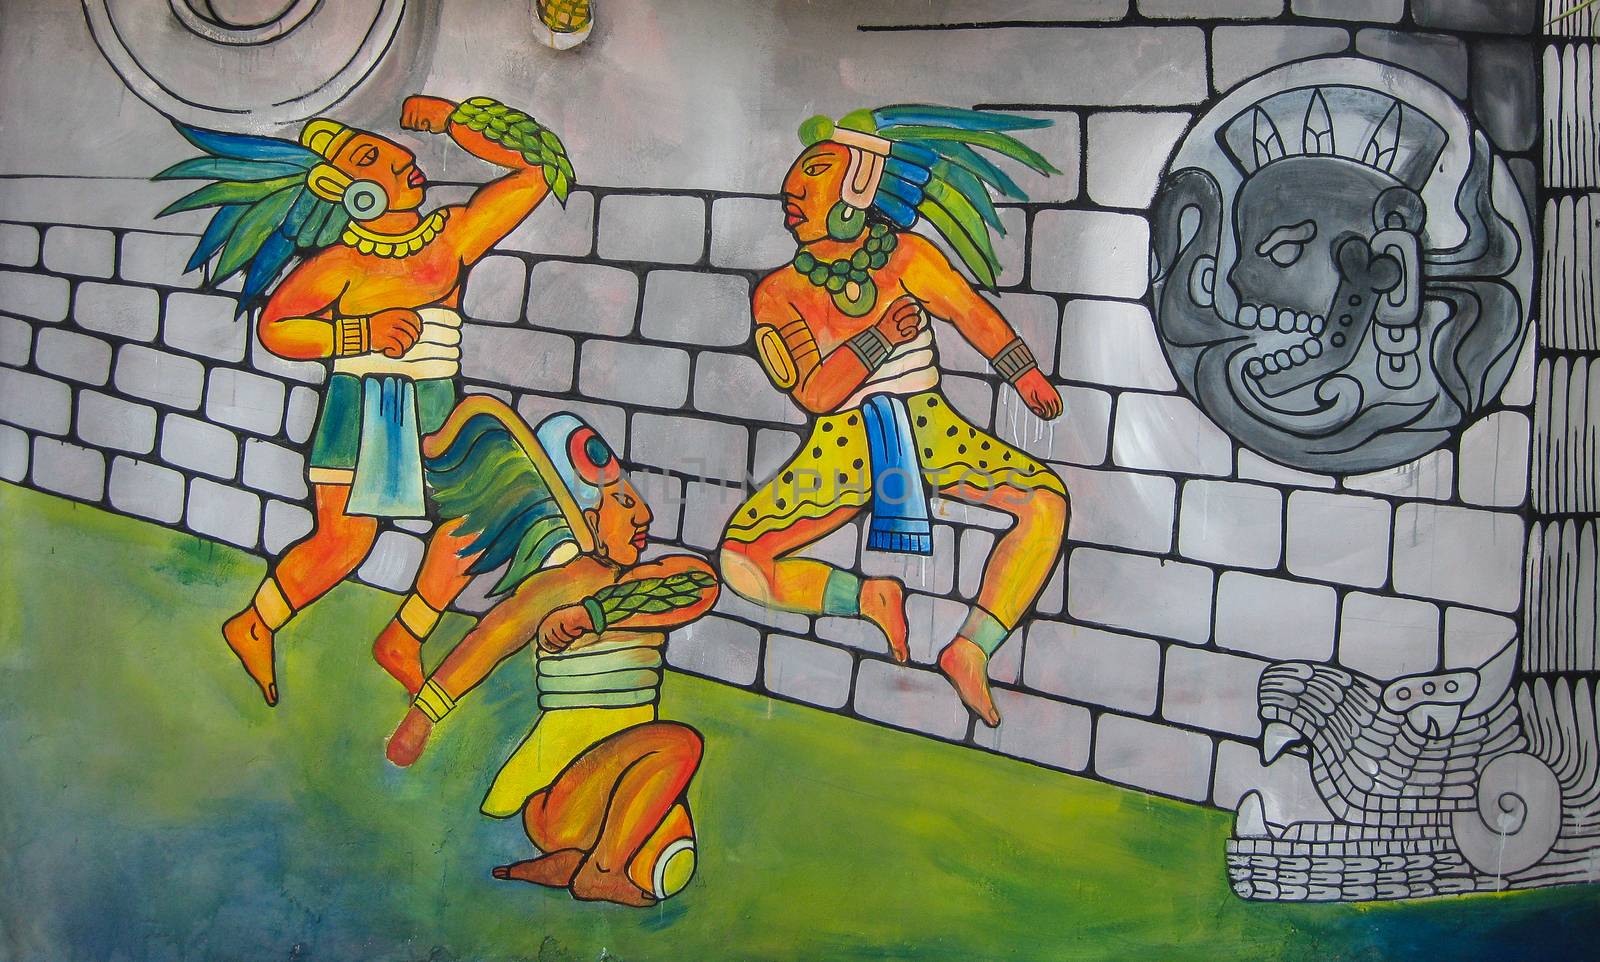 Mayan Ball Game Mural by teacherdad48@yahoo.com